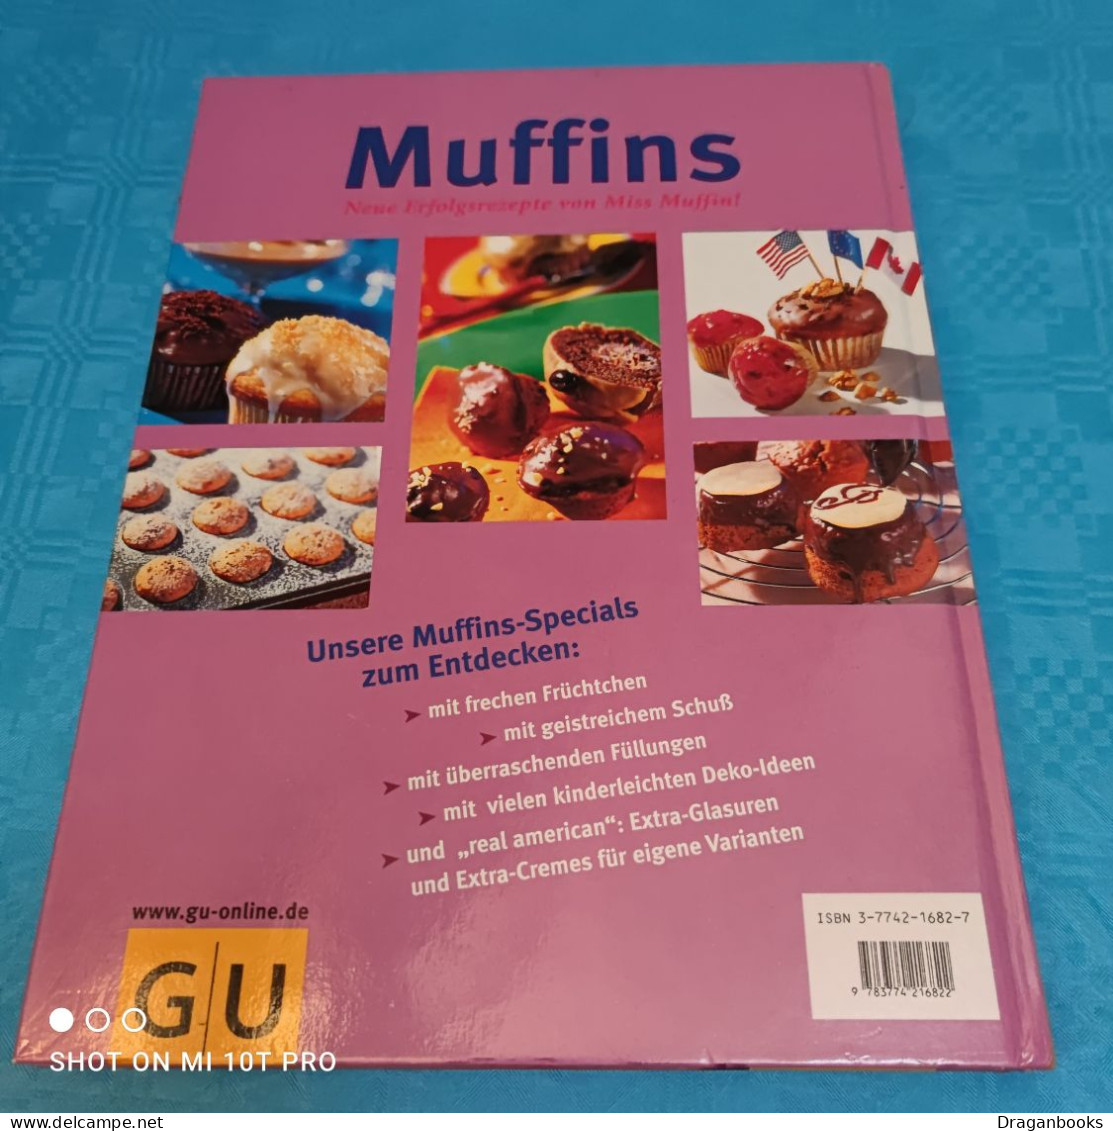 Jutta Renz - Muffins - Comidas & Bebidas